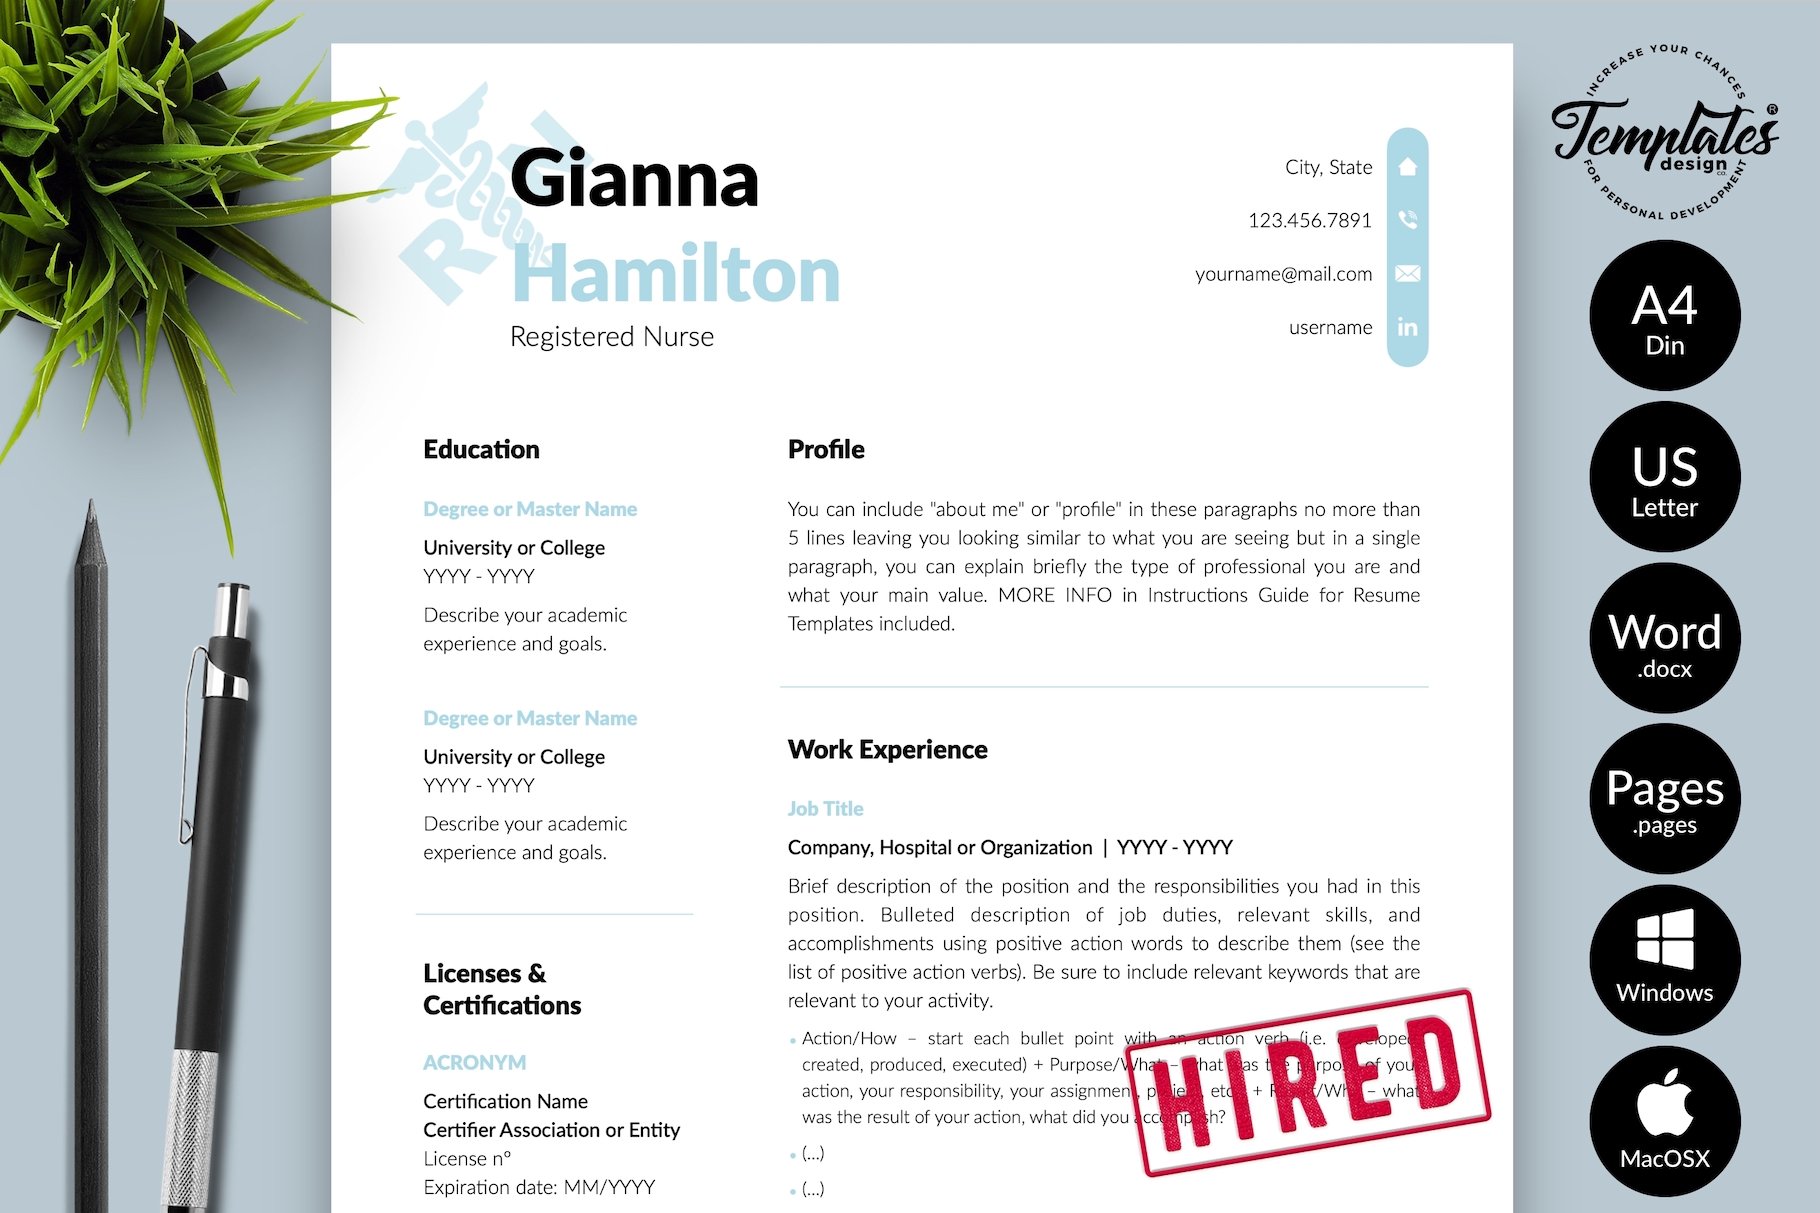 Nurse Resume Design / CV - Gianna cover image.